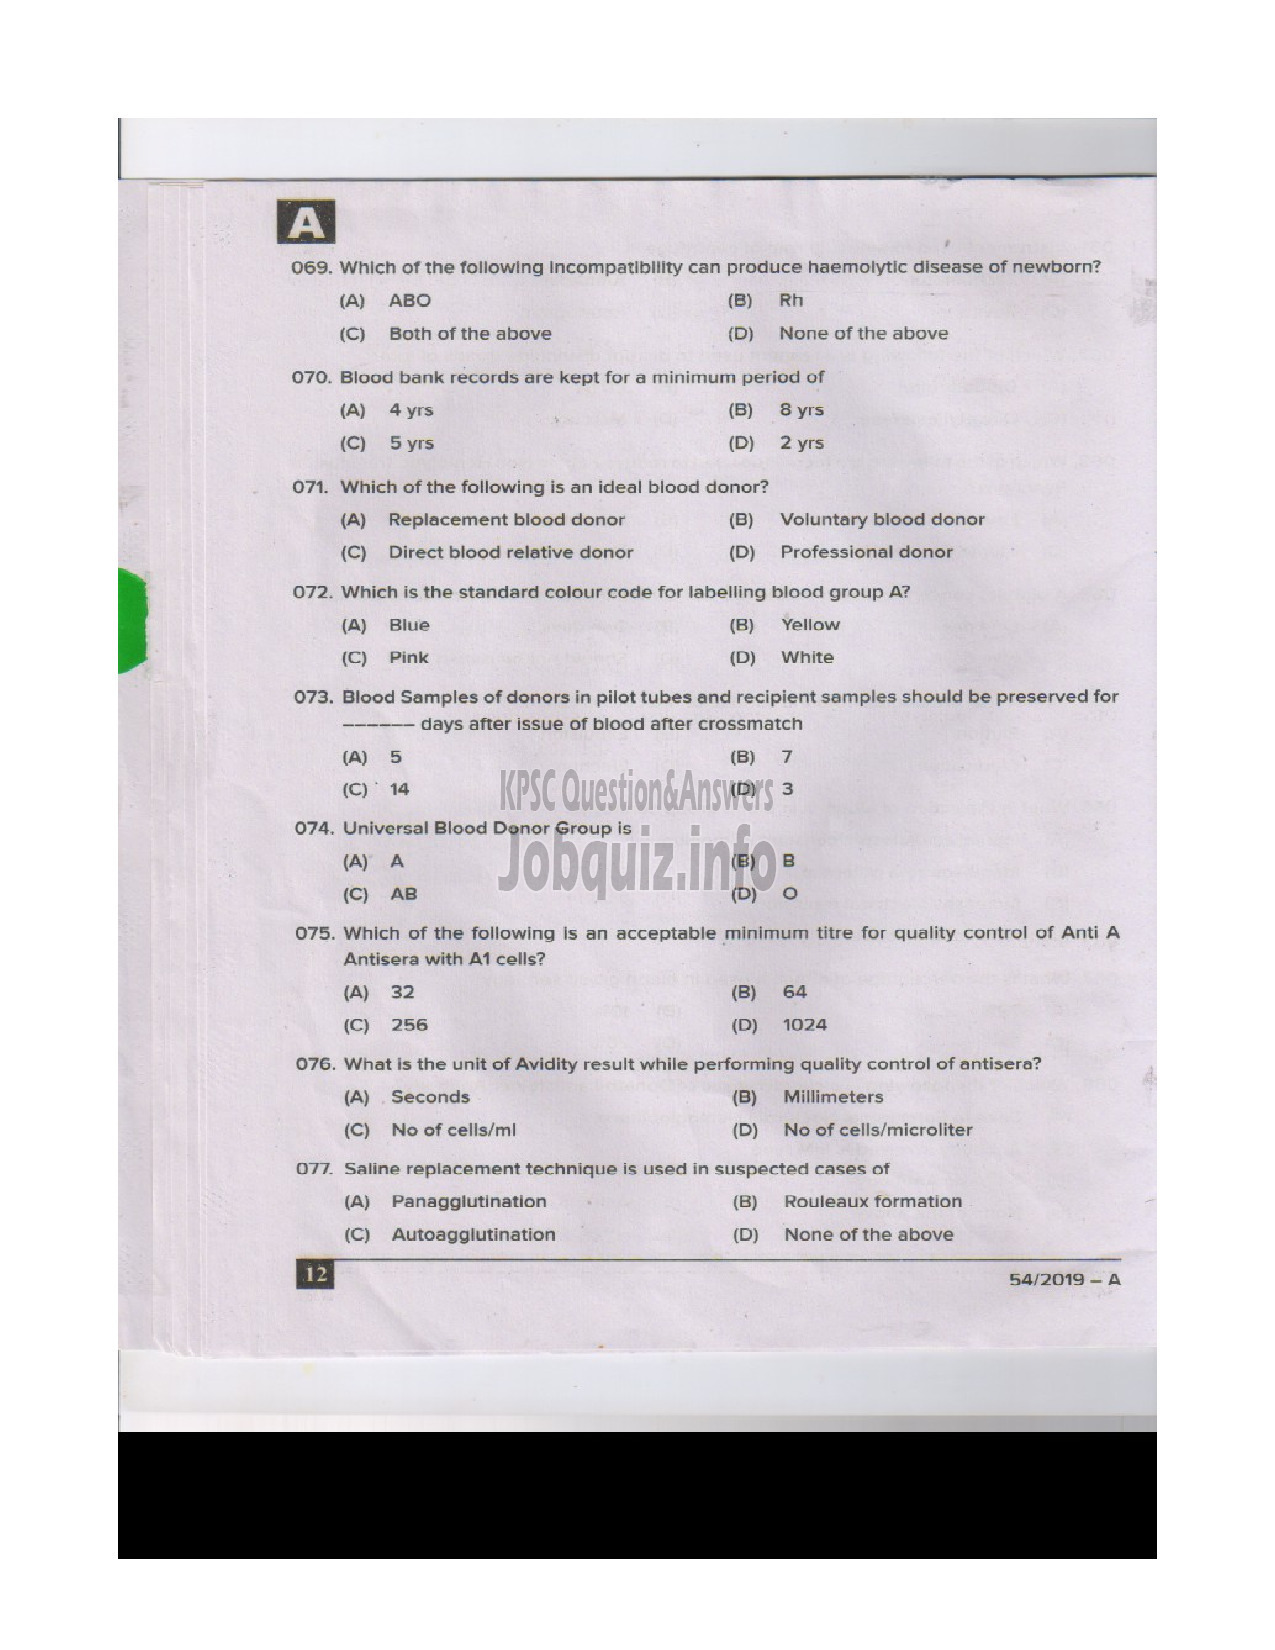 Kerala PSC Question Paper - BLOOD BANK TECHNICIAN HEALTH SERVICES ENGLISH -12